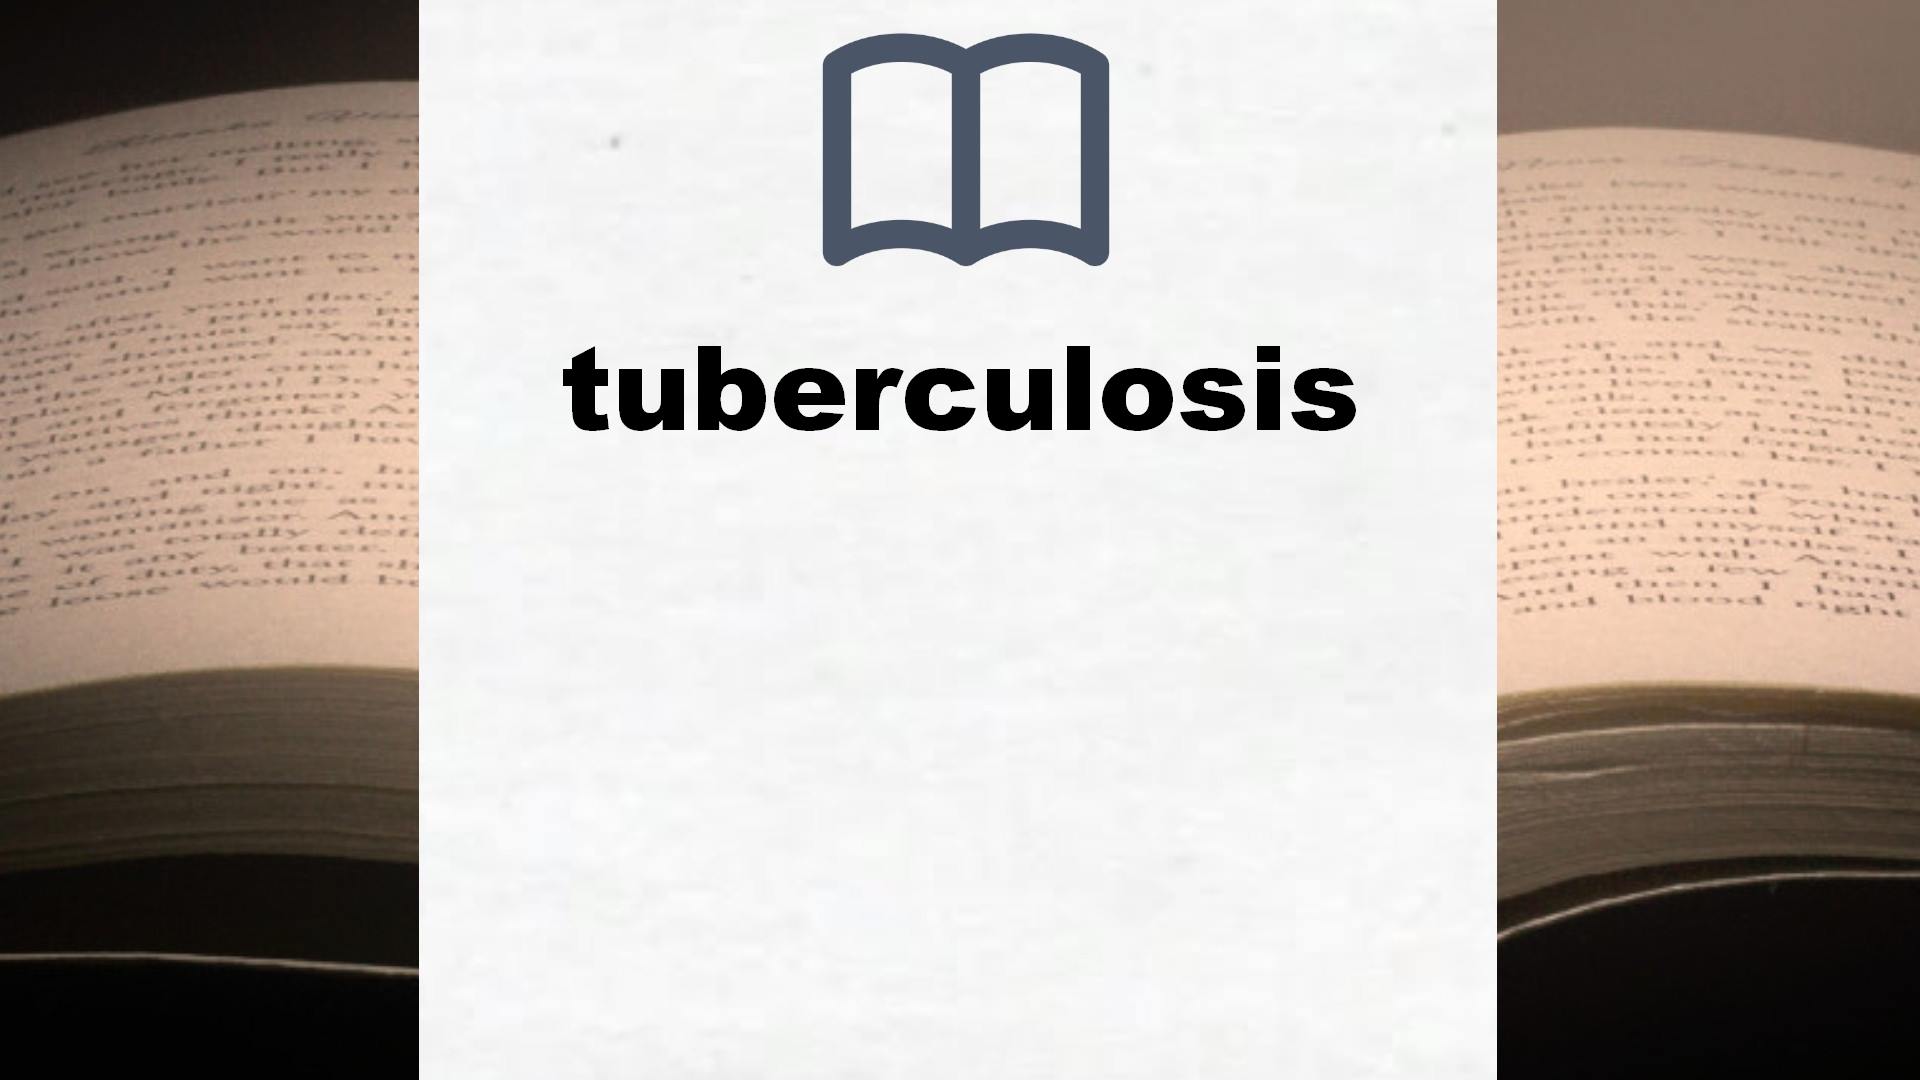 Libros sobre tuberculosis